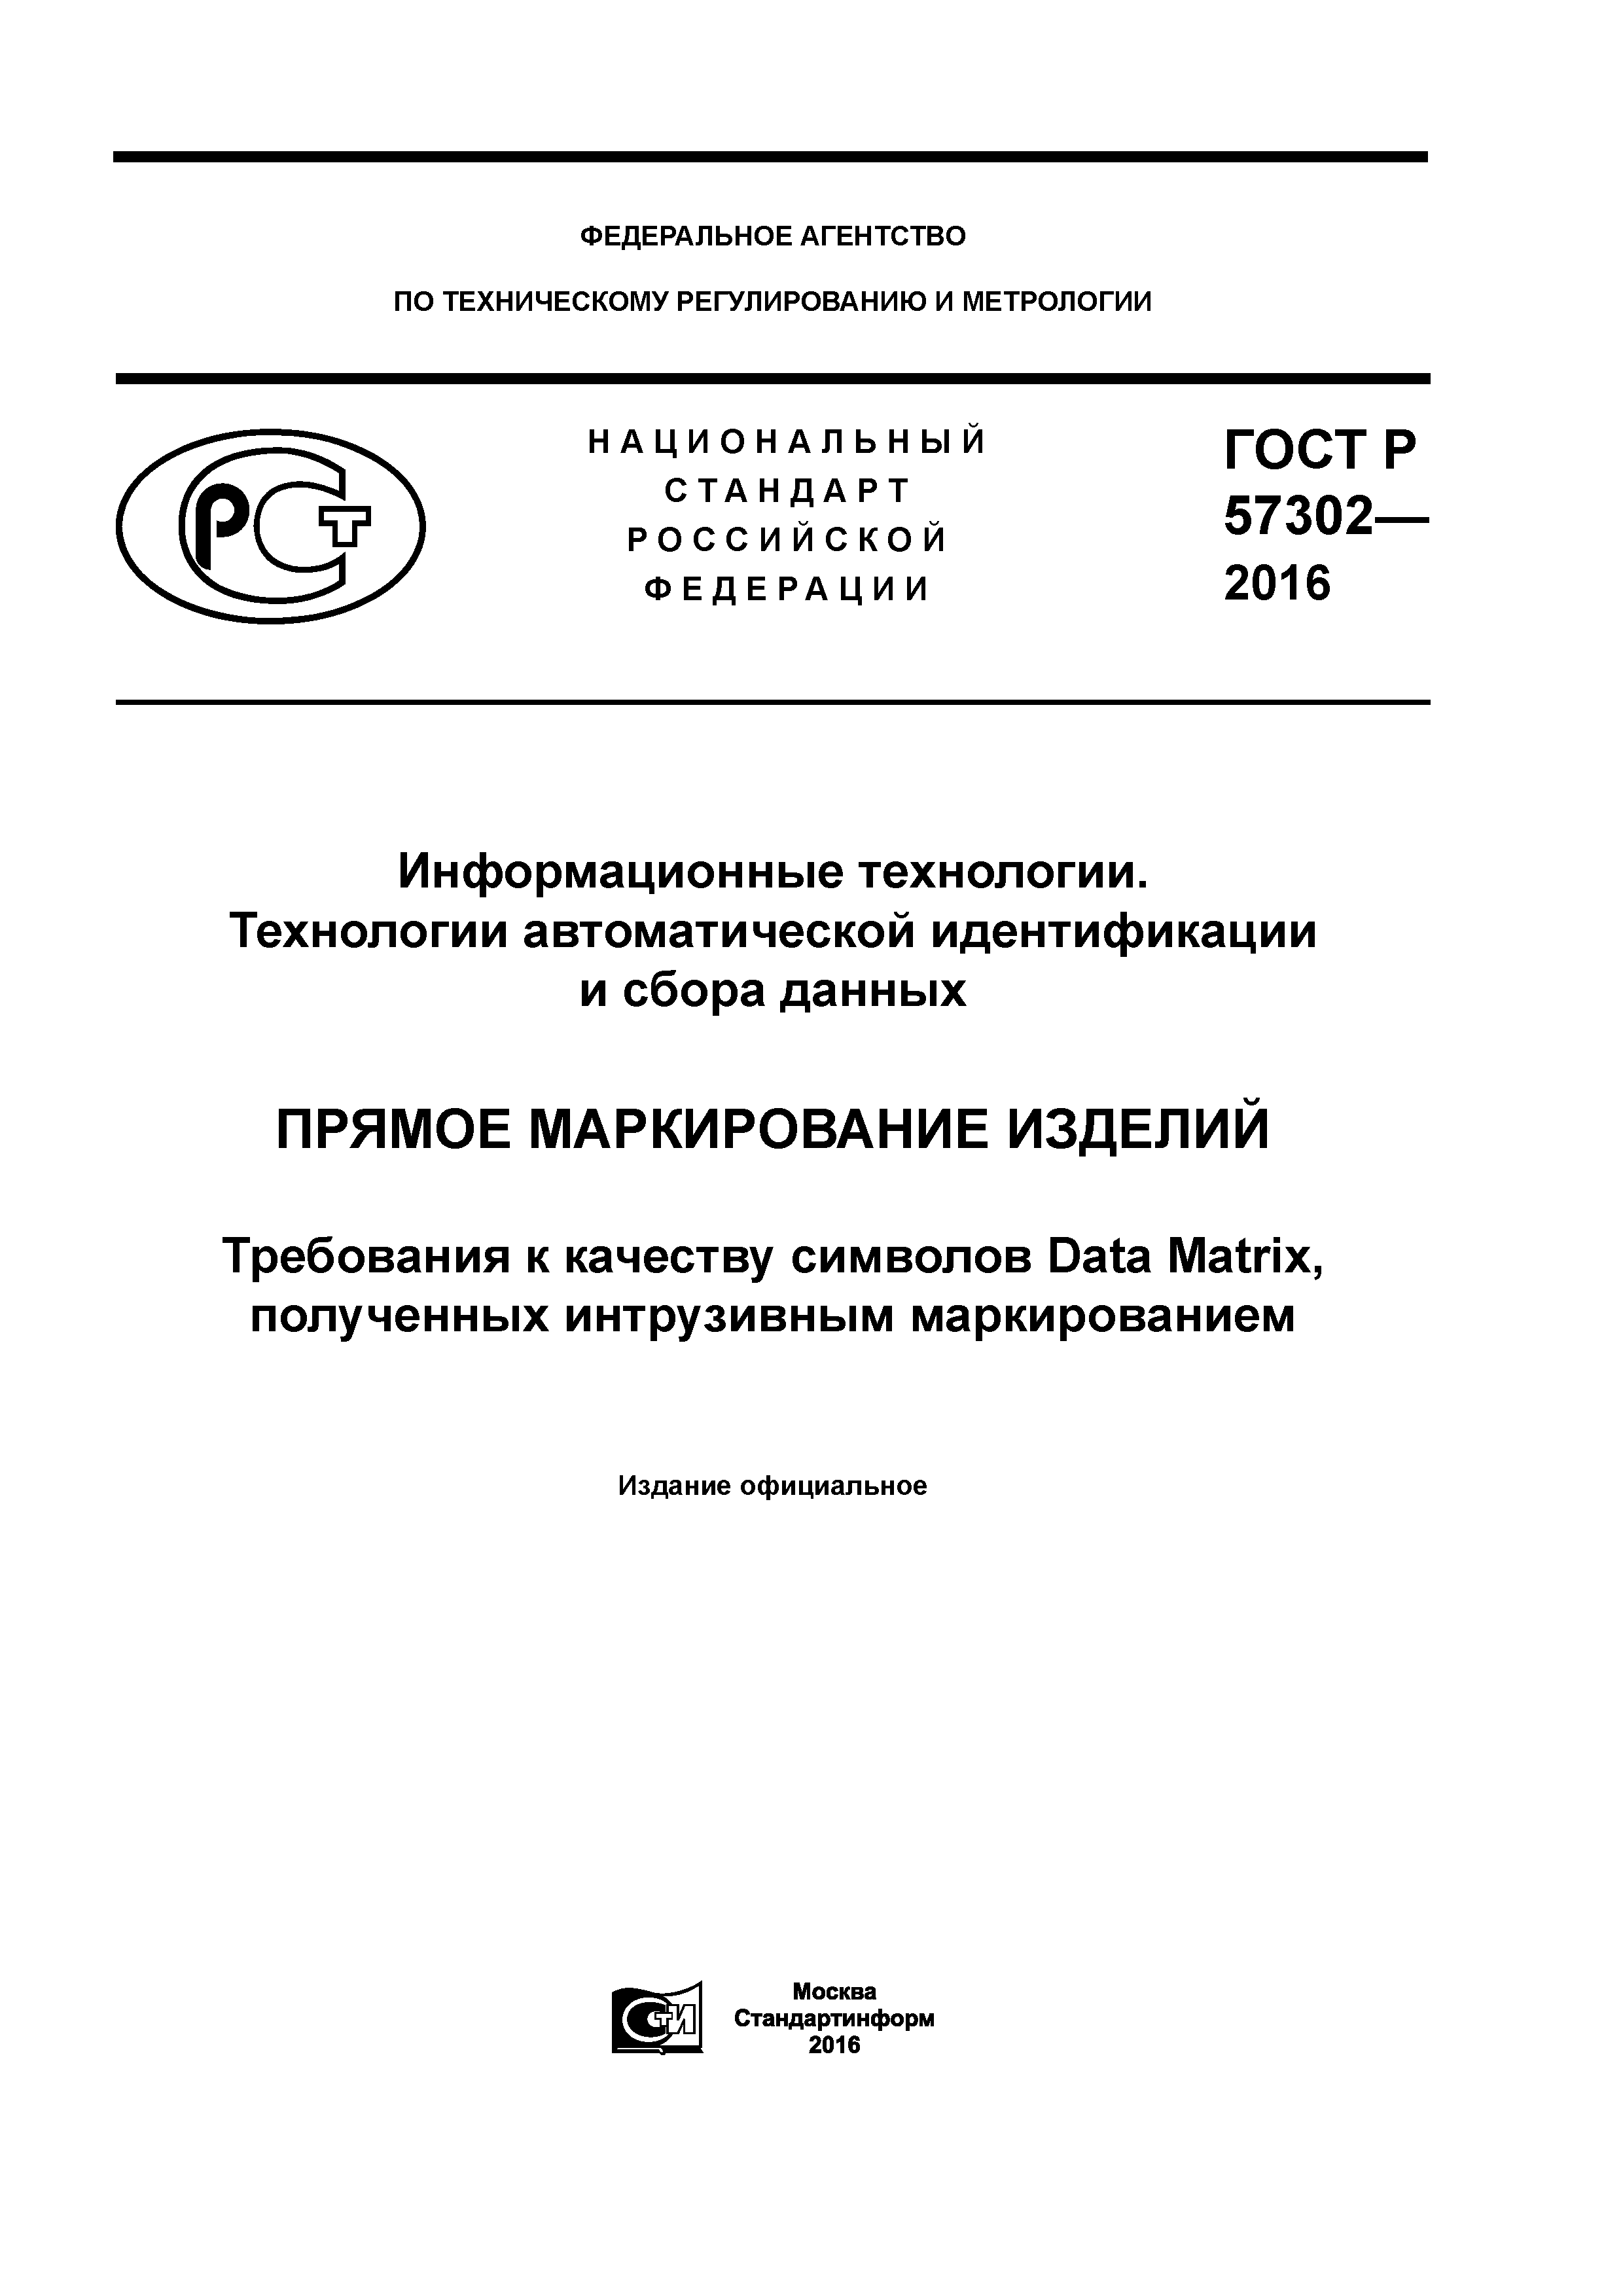 ГОСТ Р 57302-2016